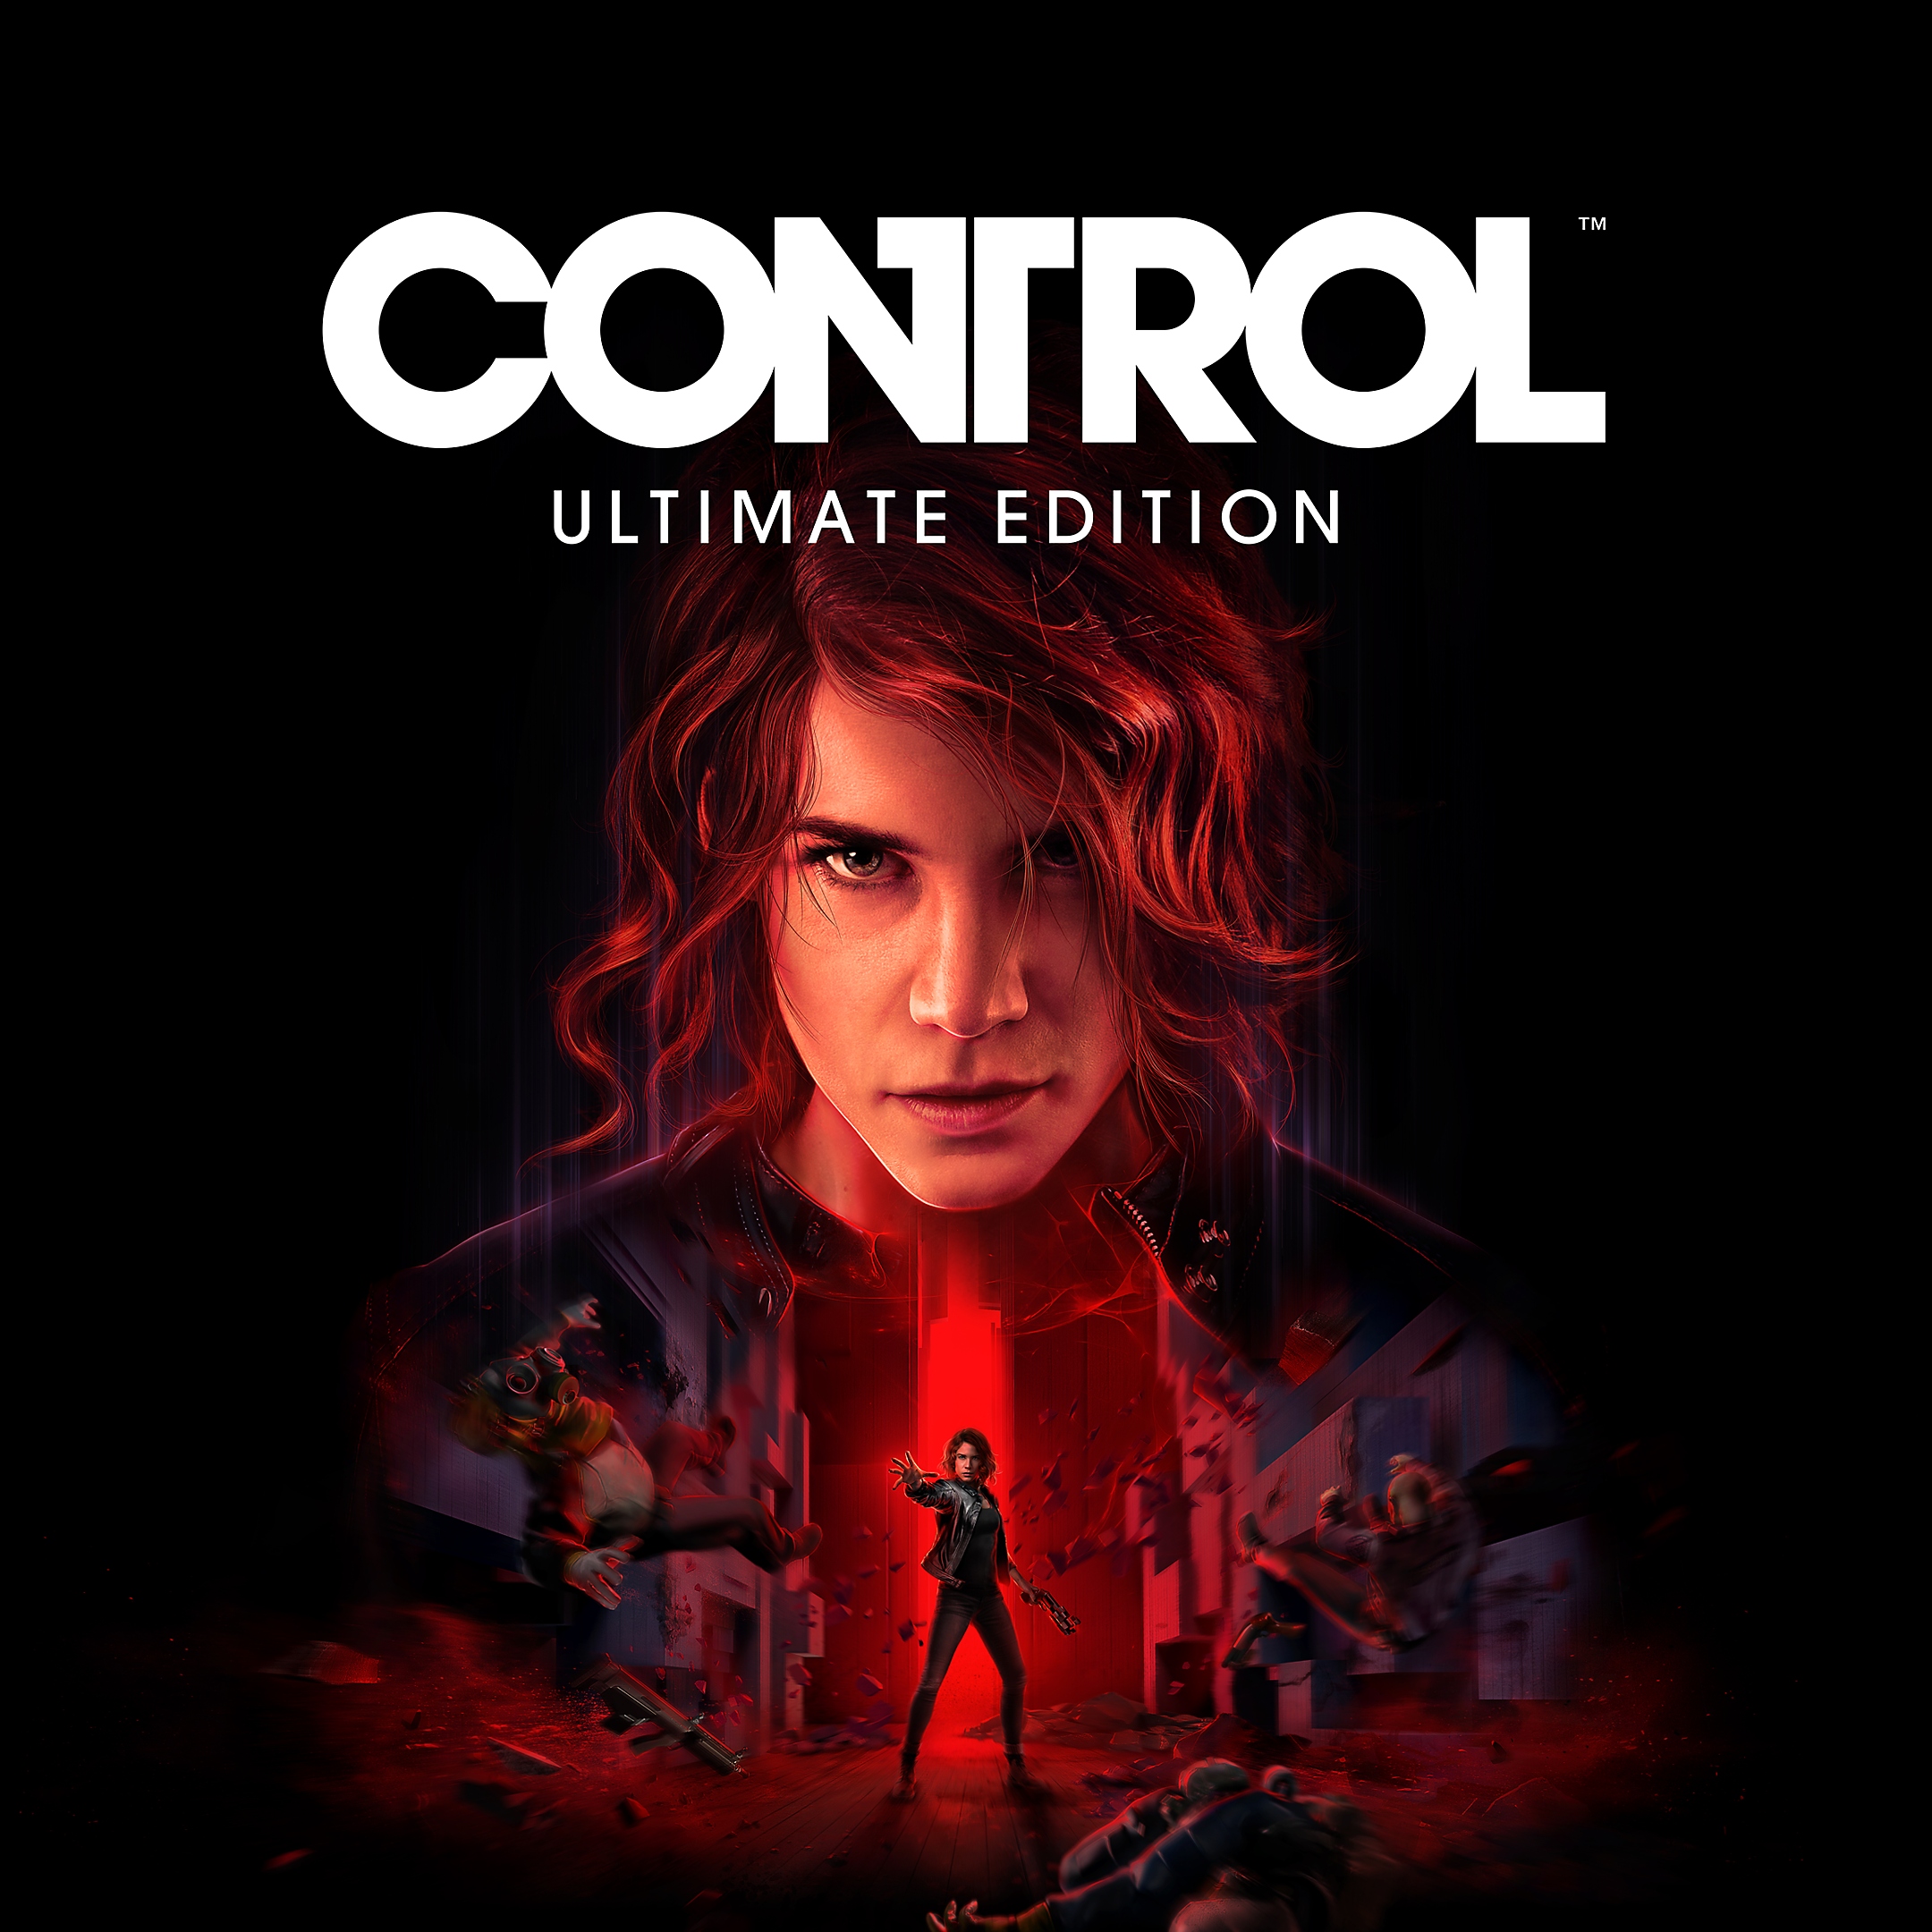 Control: Ultimate Edition – иллюстрация